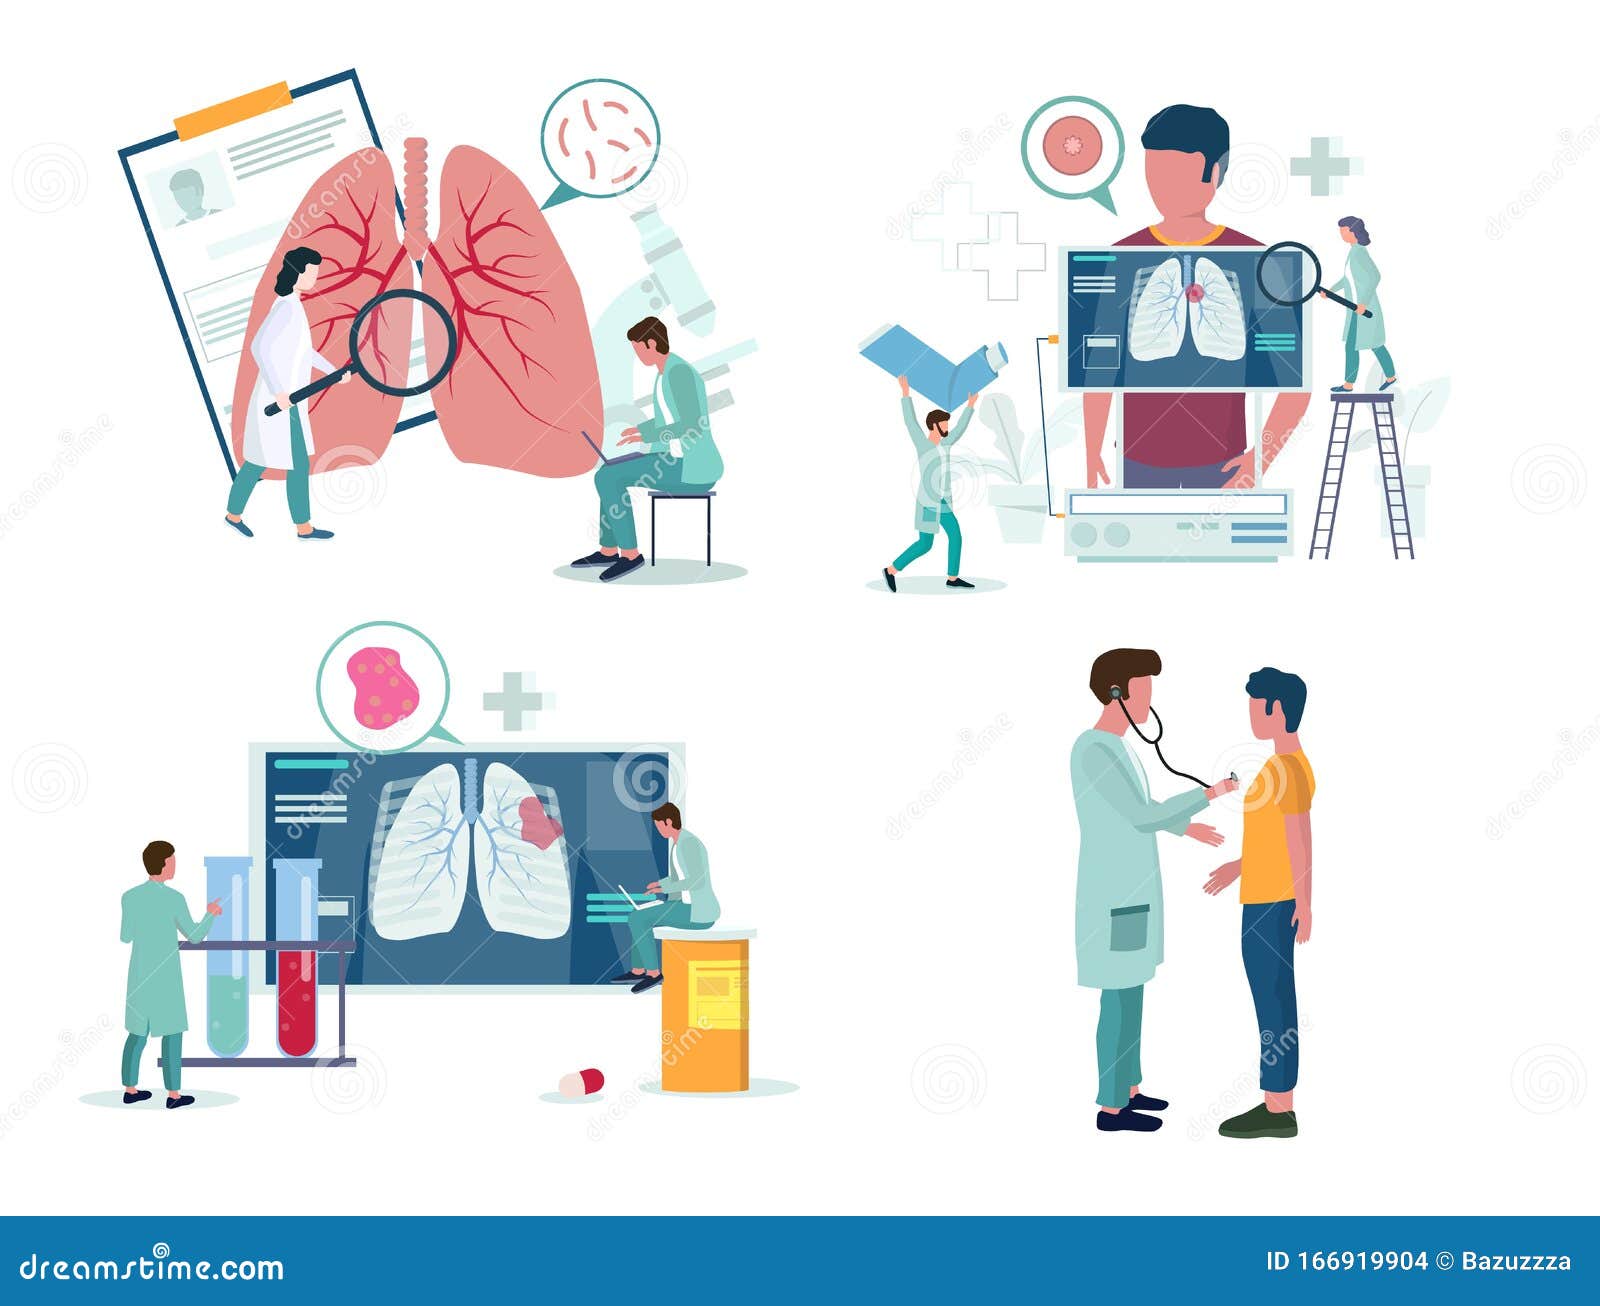 pulmonology or respiratory medicine icon set,  